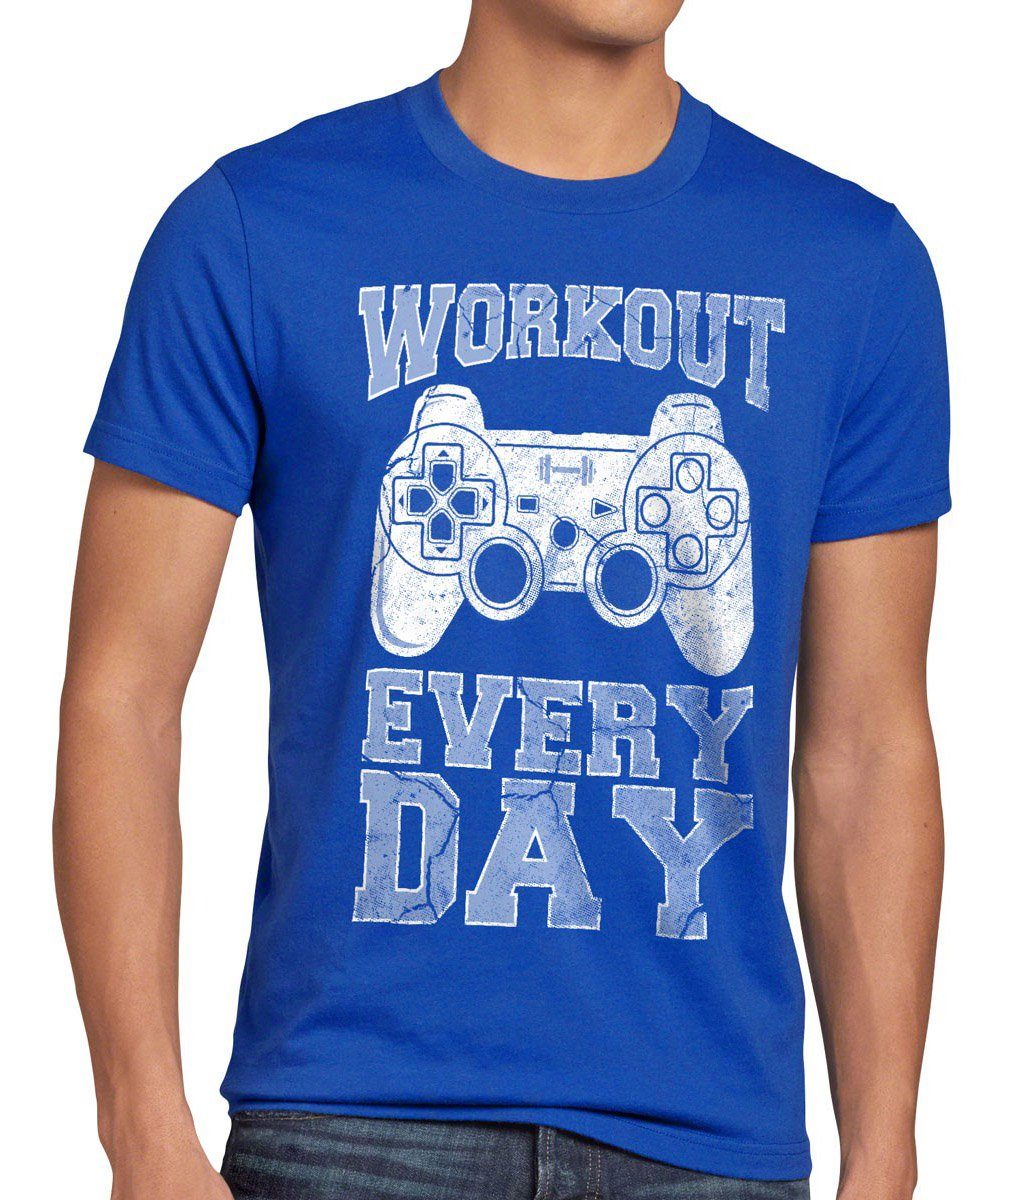 style3 Print-Shirt Herren T-Shirt Workout Gamer play sport station kontroller konsole gym game fun blau